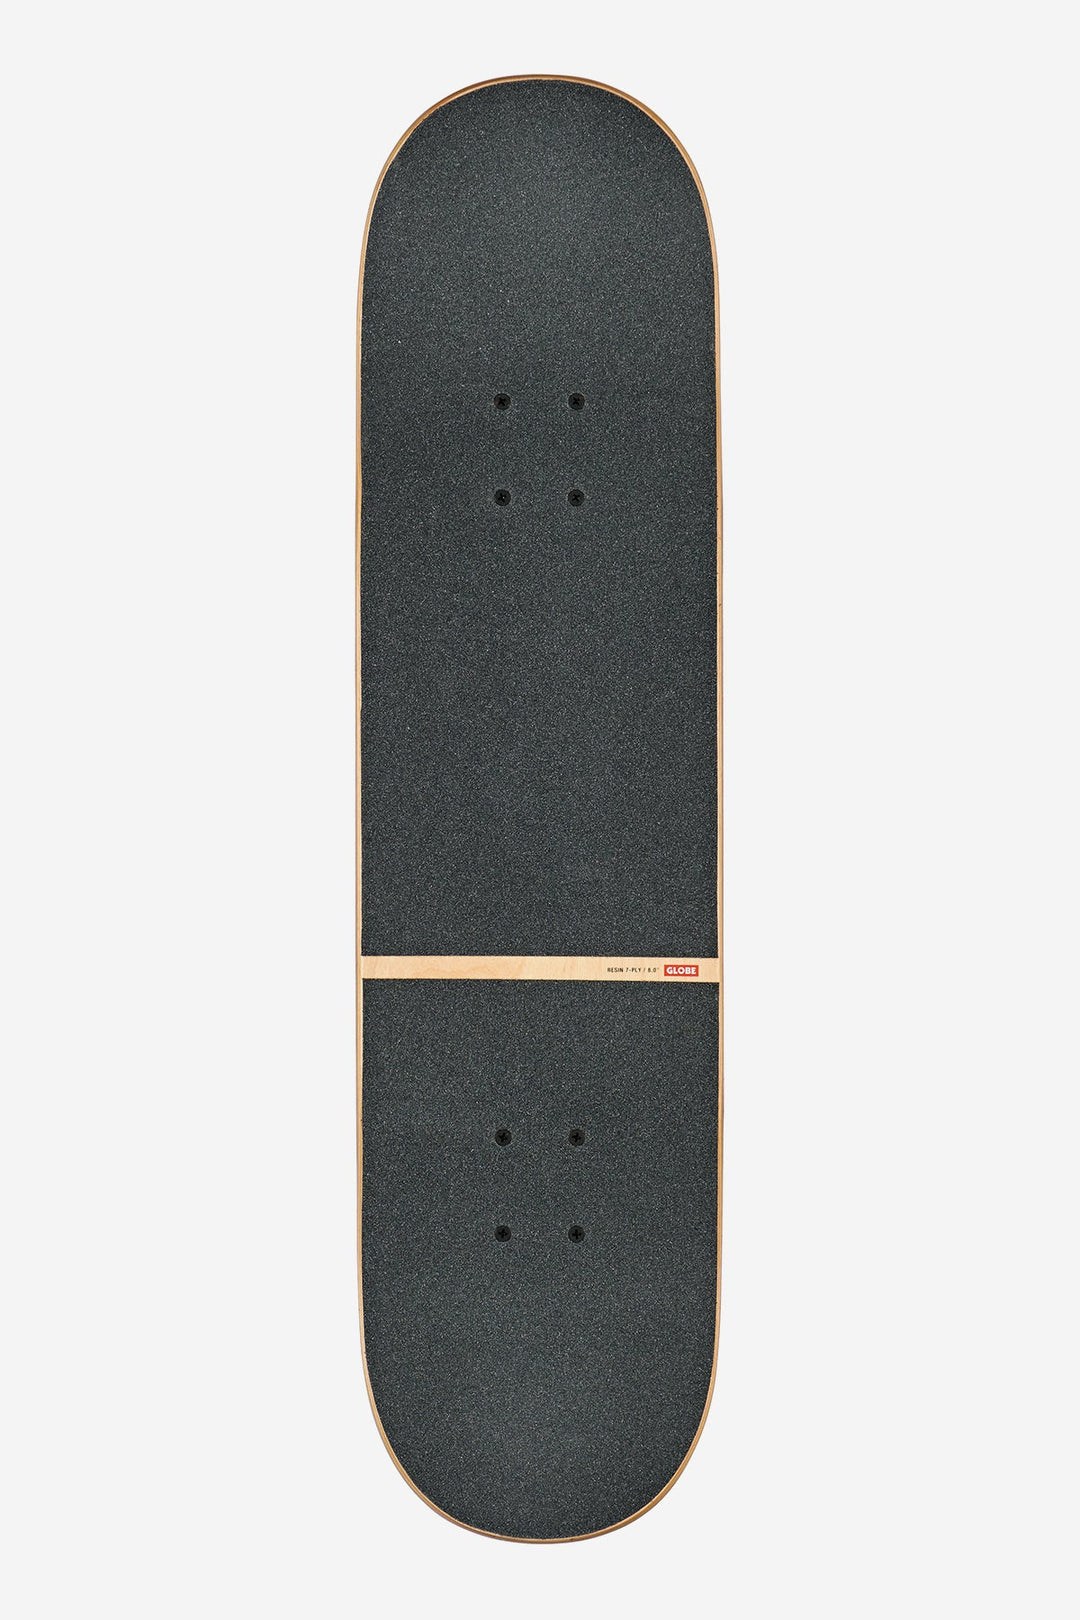 G1 Stack - Refracted - 8.0" Complete Skateboard